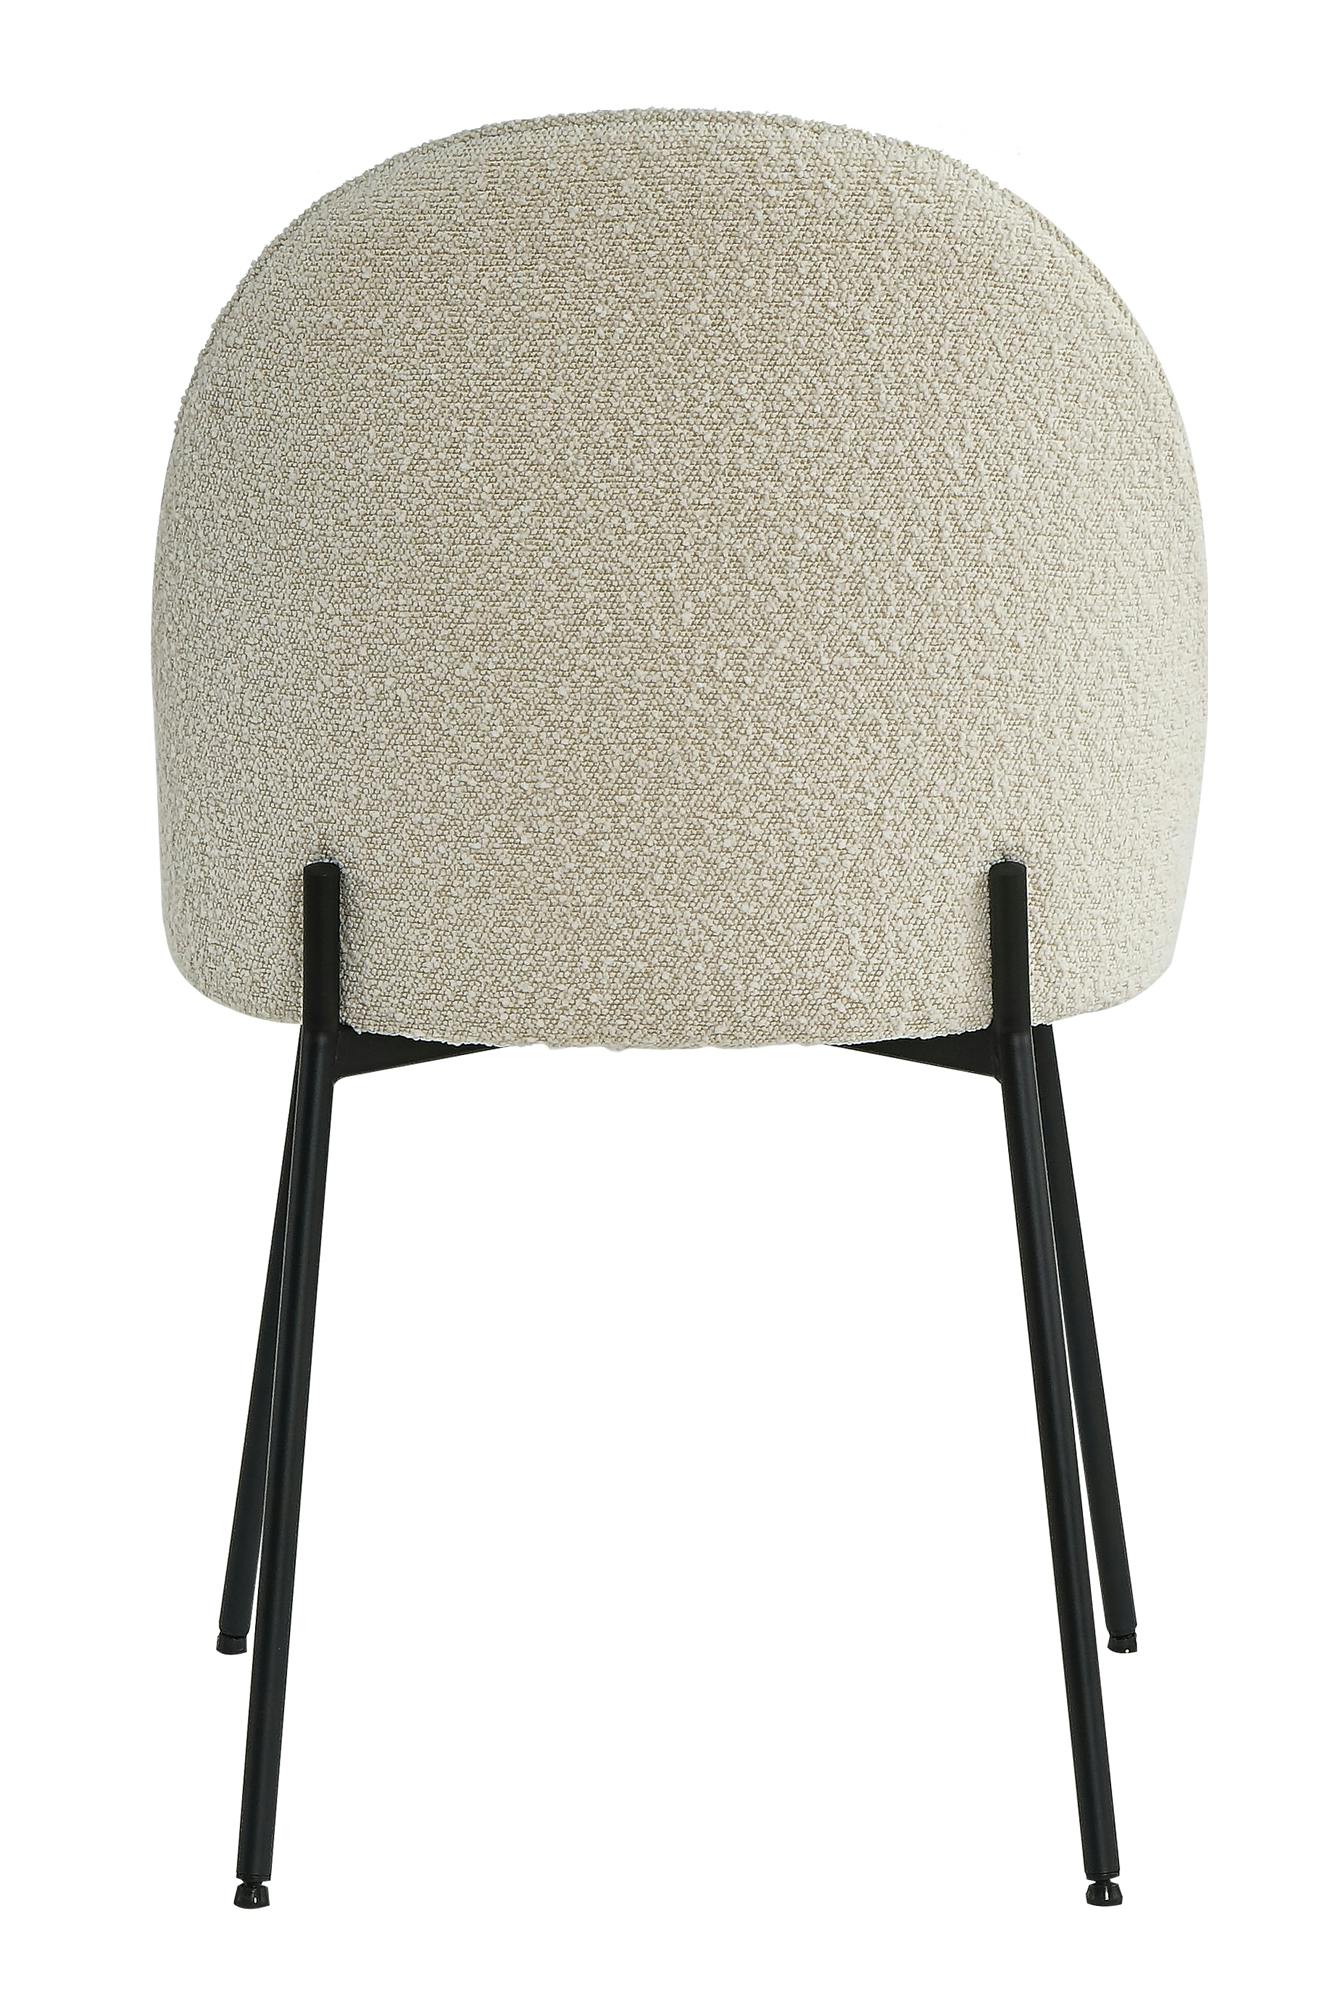 SIT Möbel Tom Tailor B57xT54xH52cm METRO | T-Bouclé |02412-03 Beine Pad beige| | Stuhl Marktplatz 2er-Set gepolstert | SIT&CHAIRS Metall Chair | schwarz |Serie